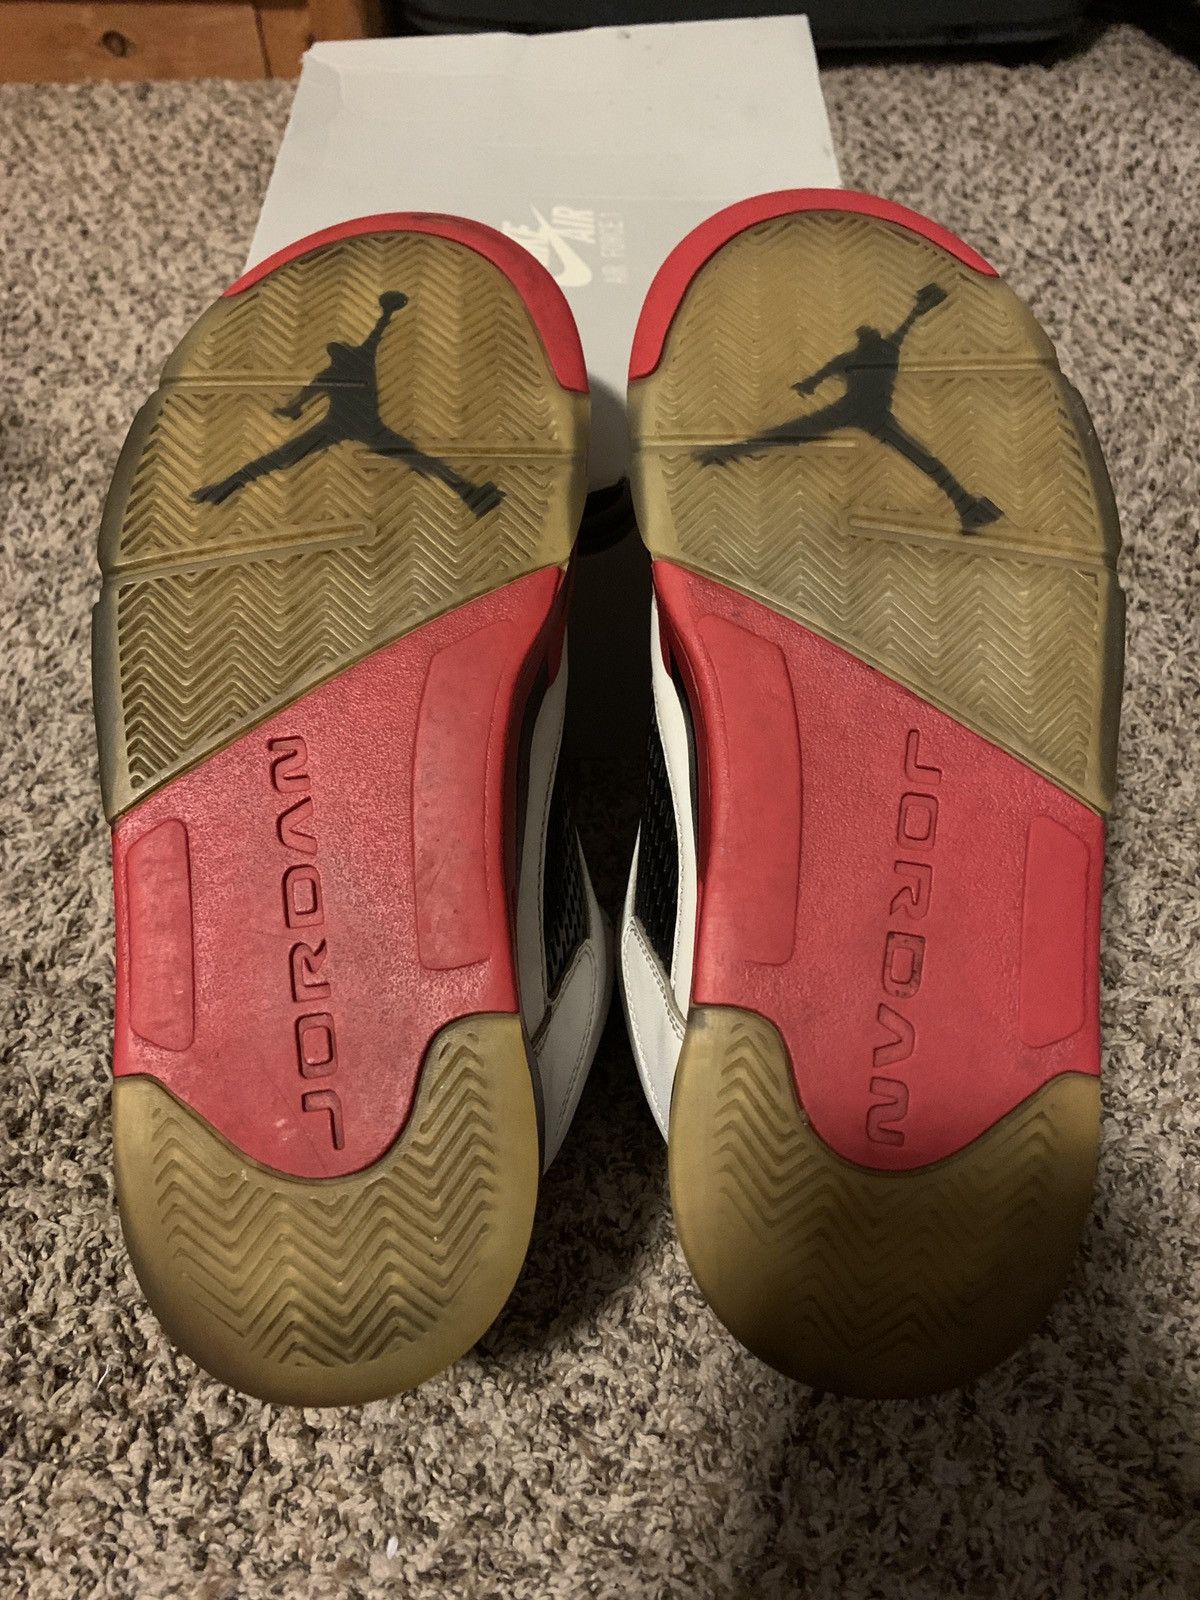 Jordan Brand Jordan Fire Red 5s Size US 10 / EU 43 - 7 Preview